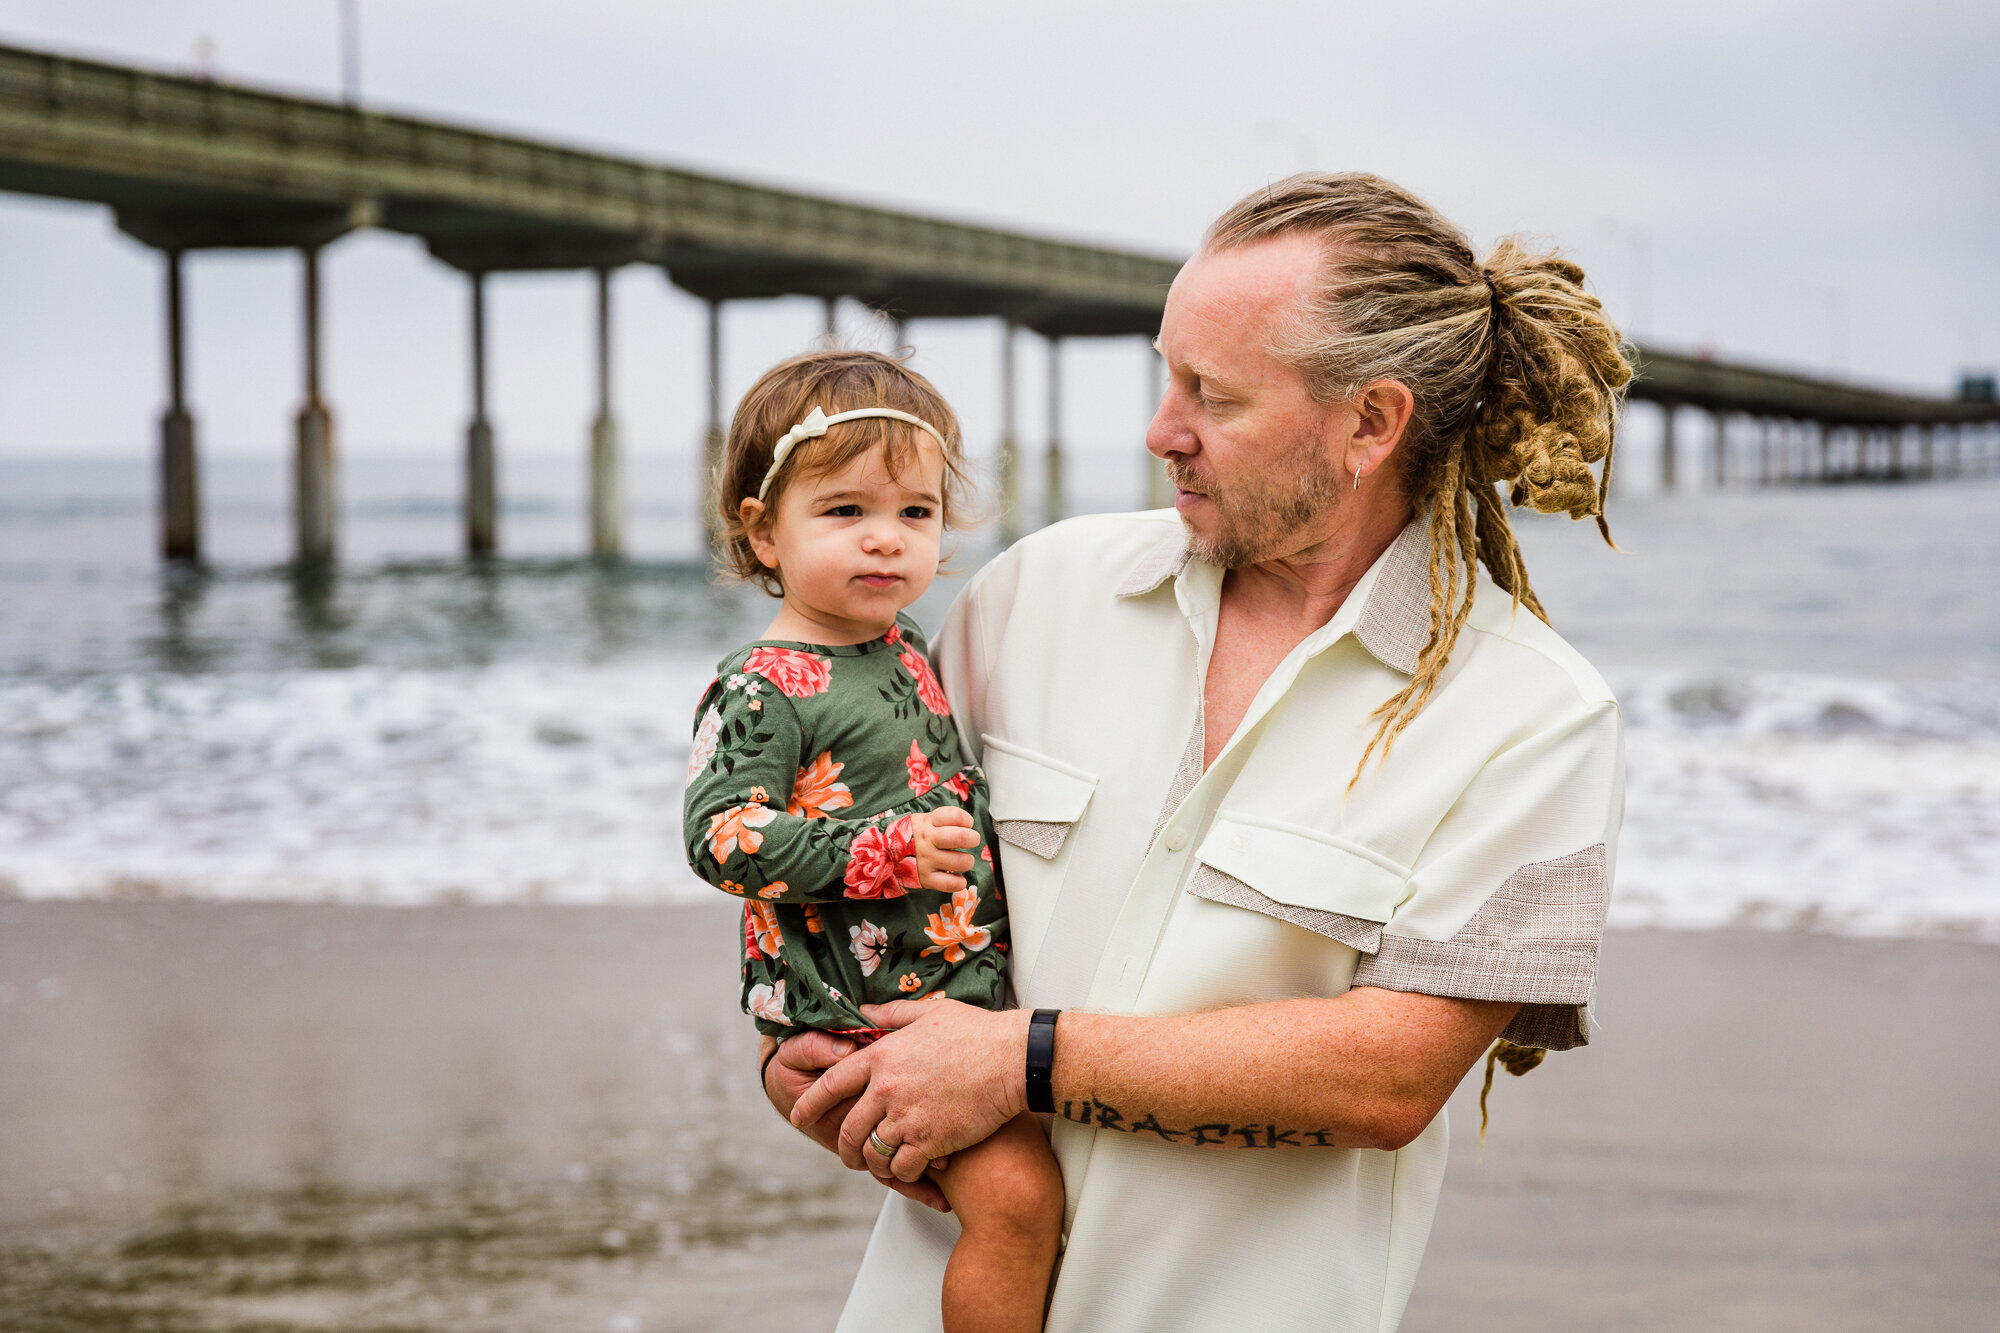 Family Portrait Photography Session at Ocean Beach Pier, San Diego, California-56.jpg